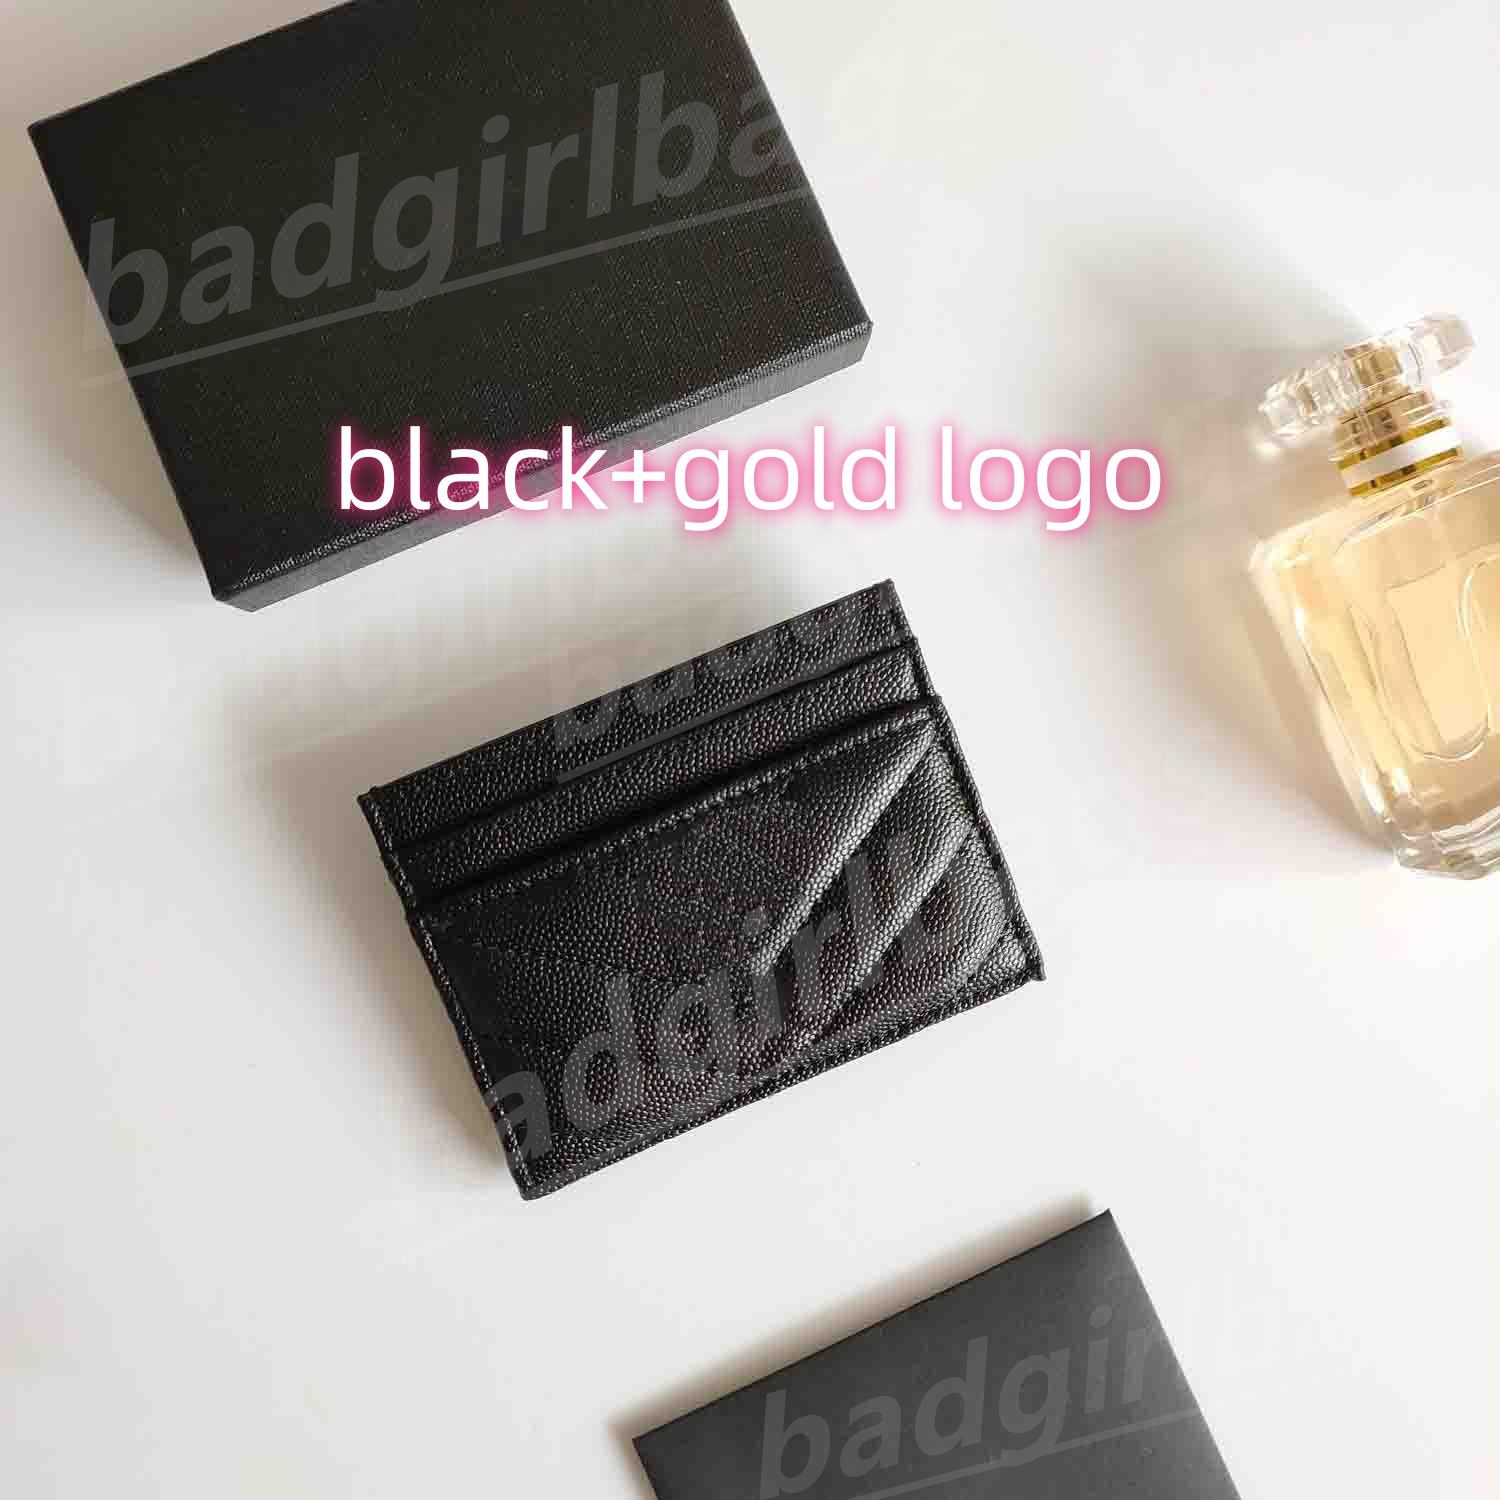 Black+gold logo